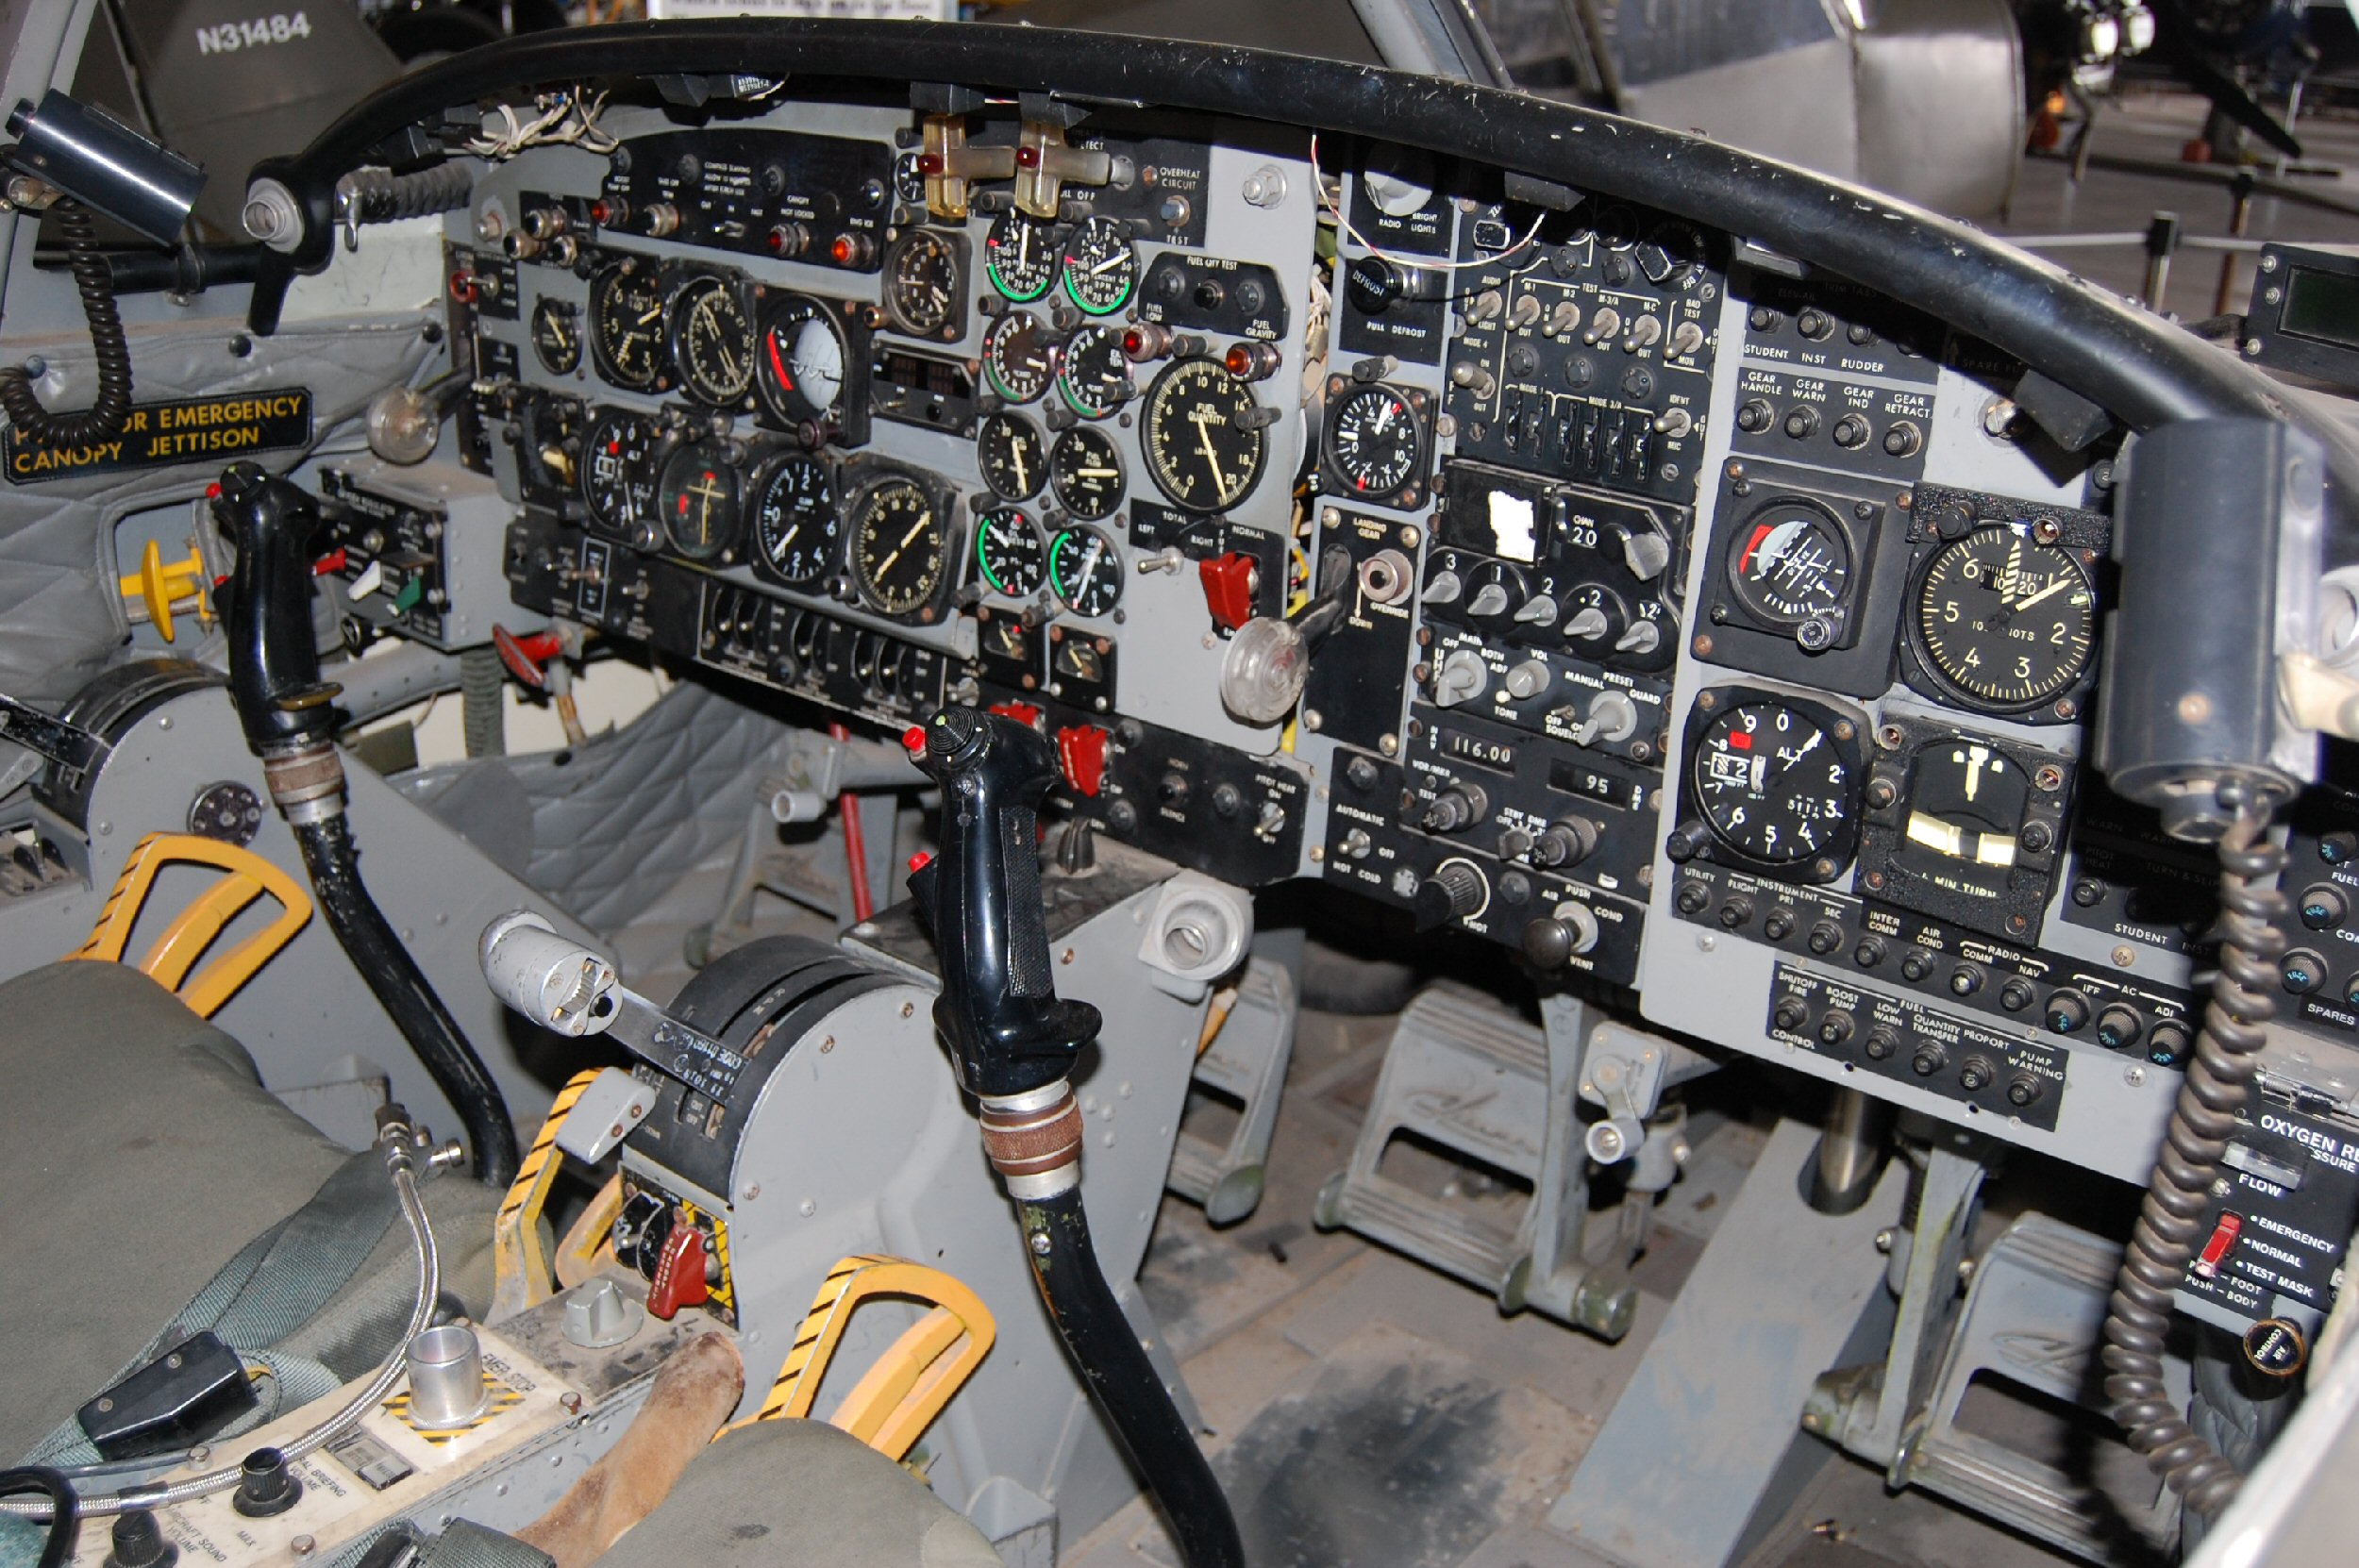 vfm t-37 cockpit